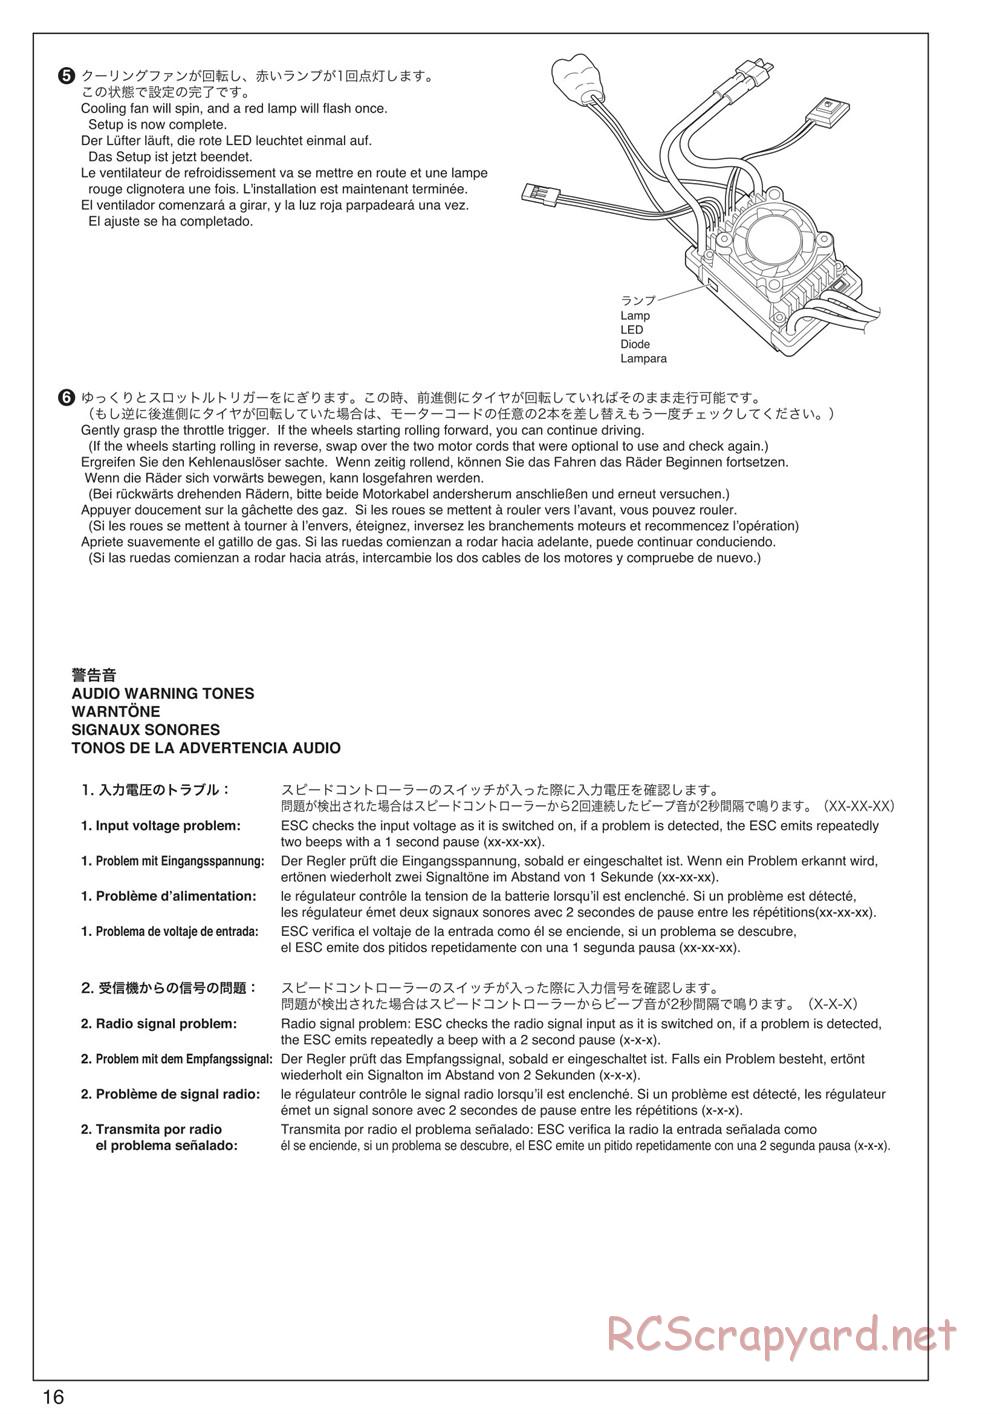 Kyosho - DMT-VE - Manual - Page 16